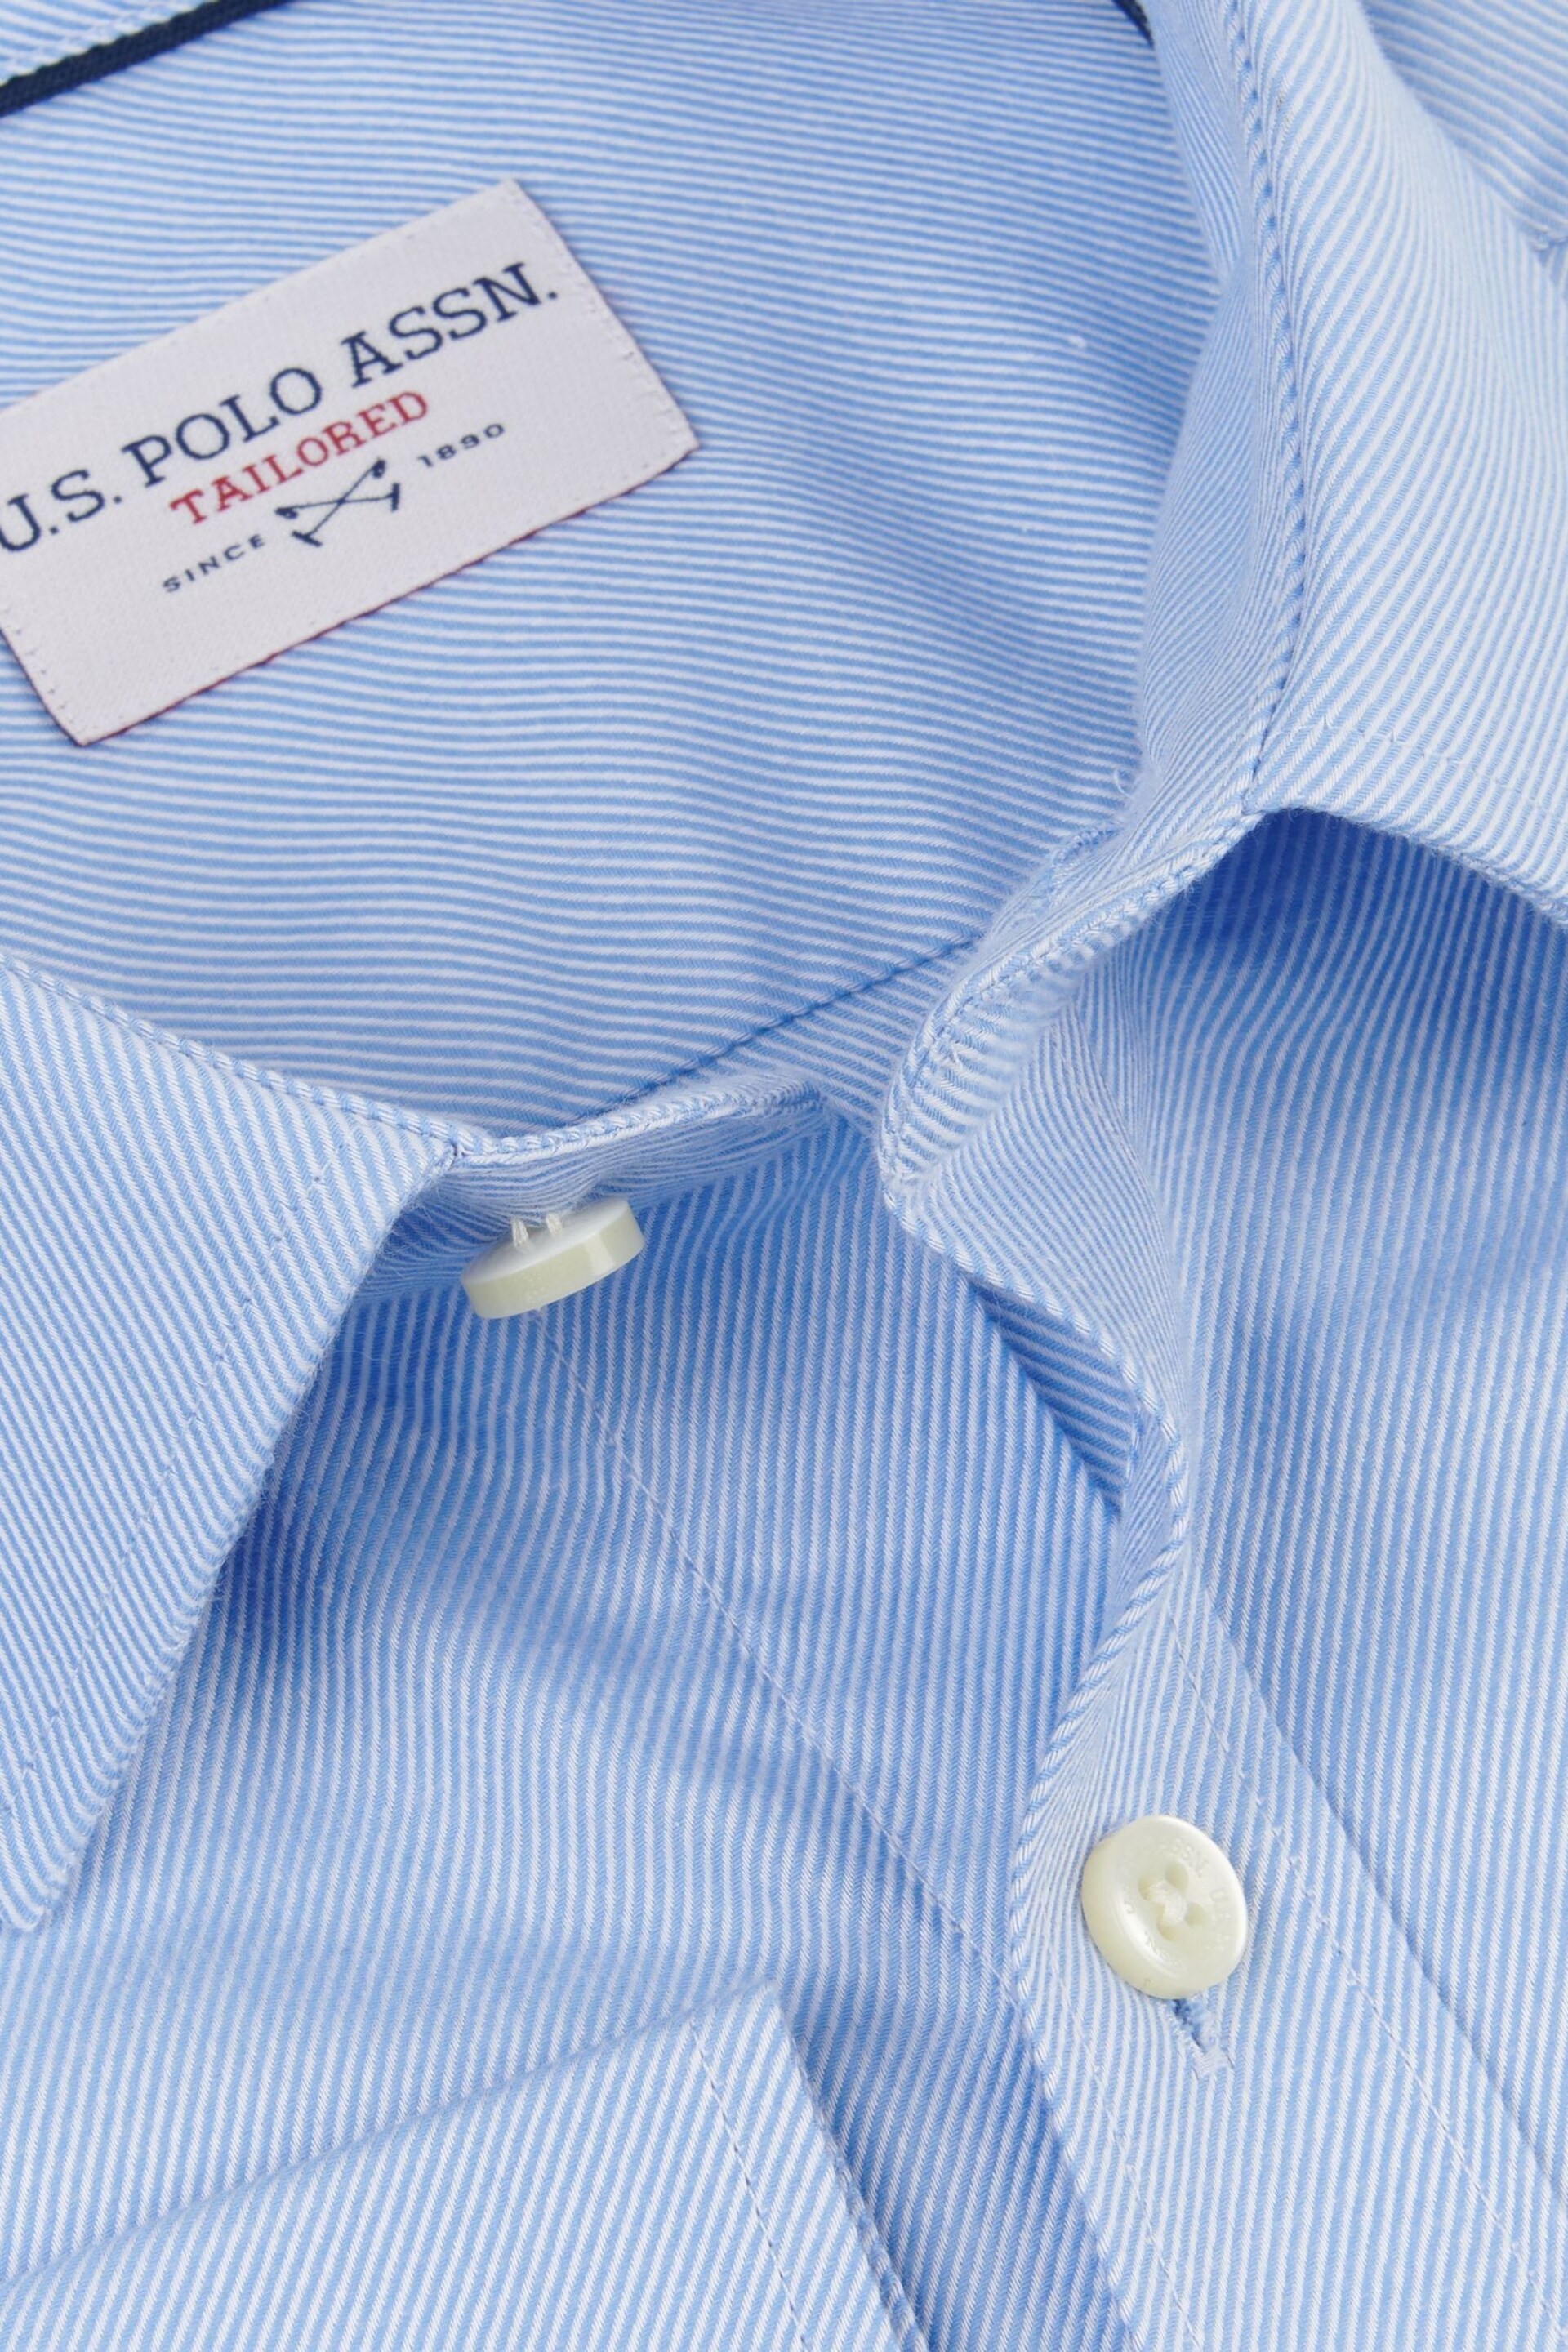 U.S. Polo Assn. Mens Long Sleeve Royal Twill Shirt - Image 7 of 8